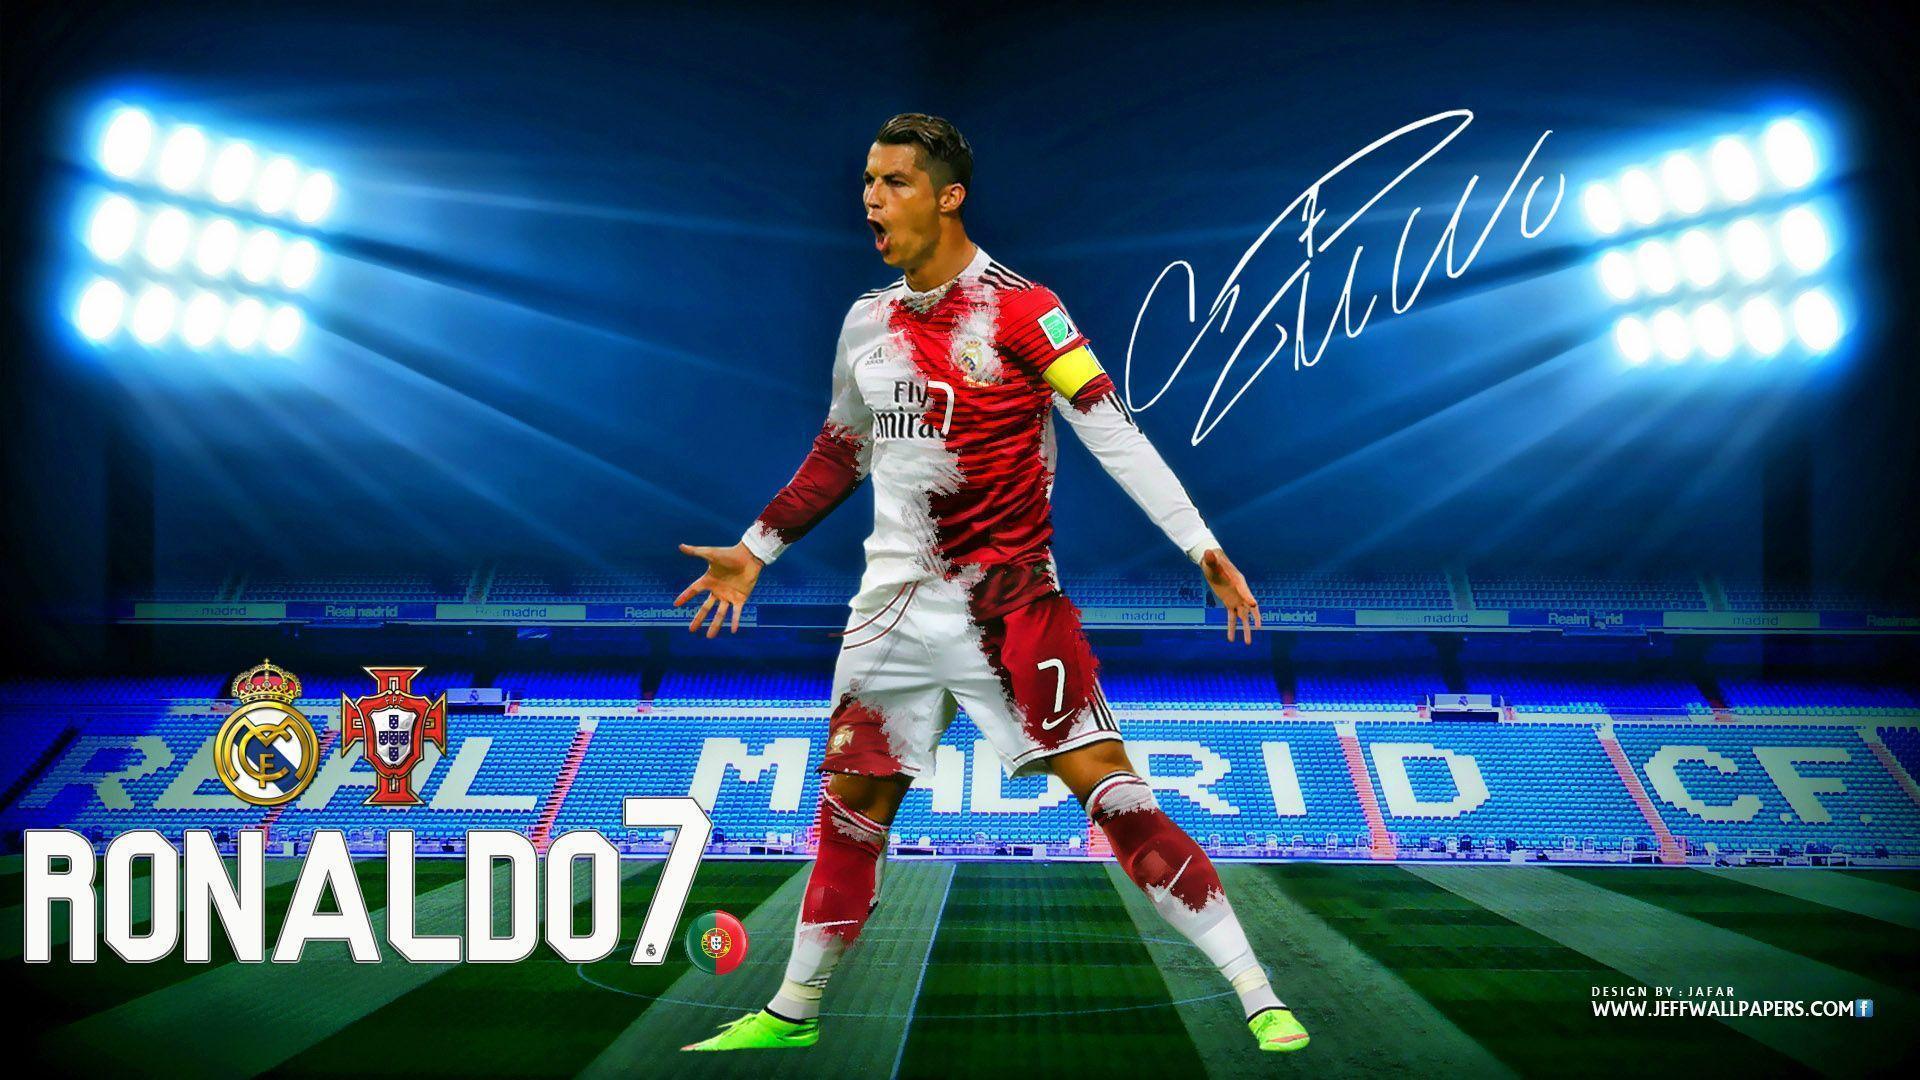 Football, Soccer, Cr Cristiano Ronaldo, Real